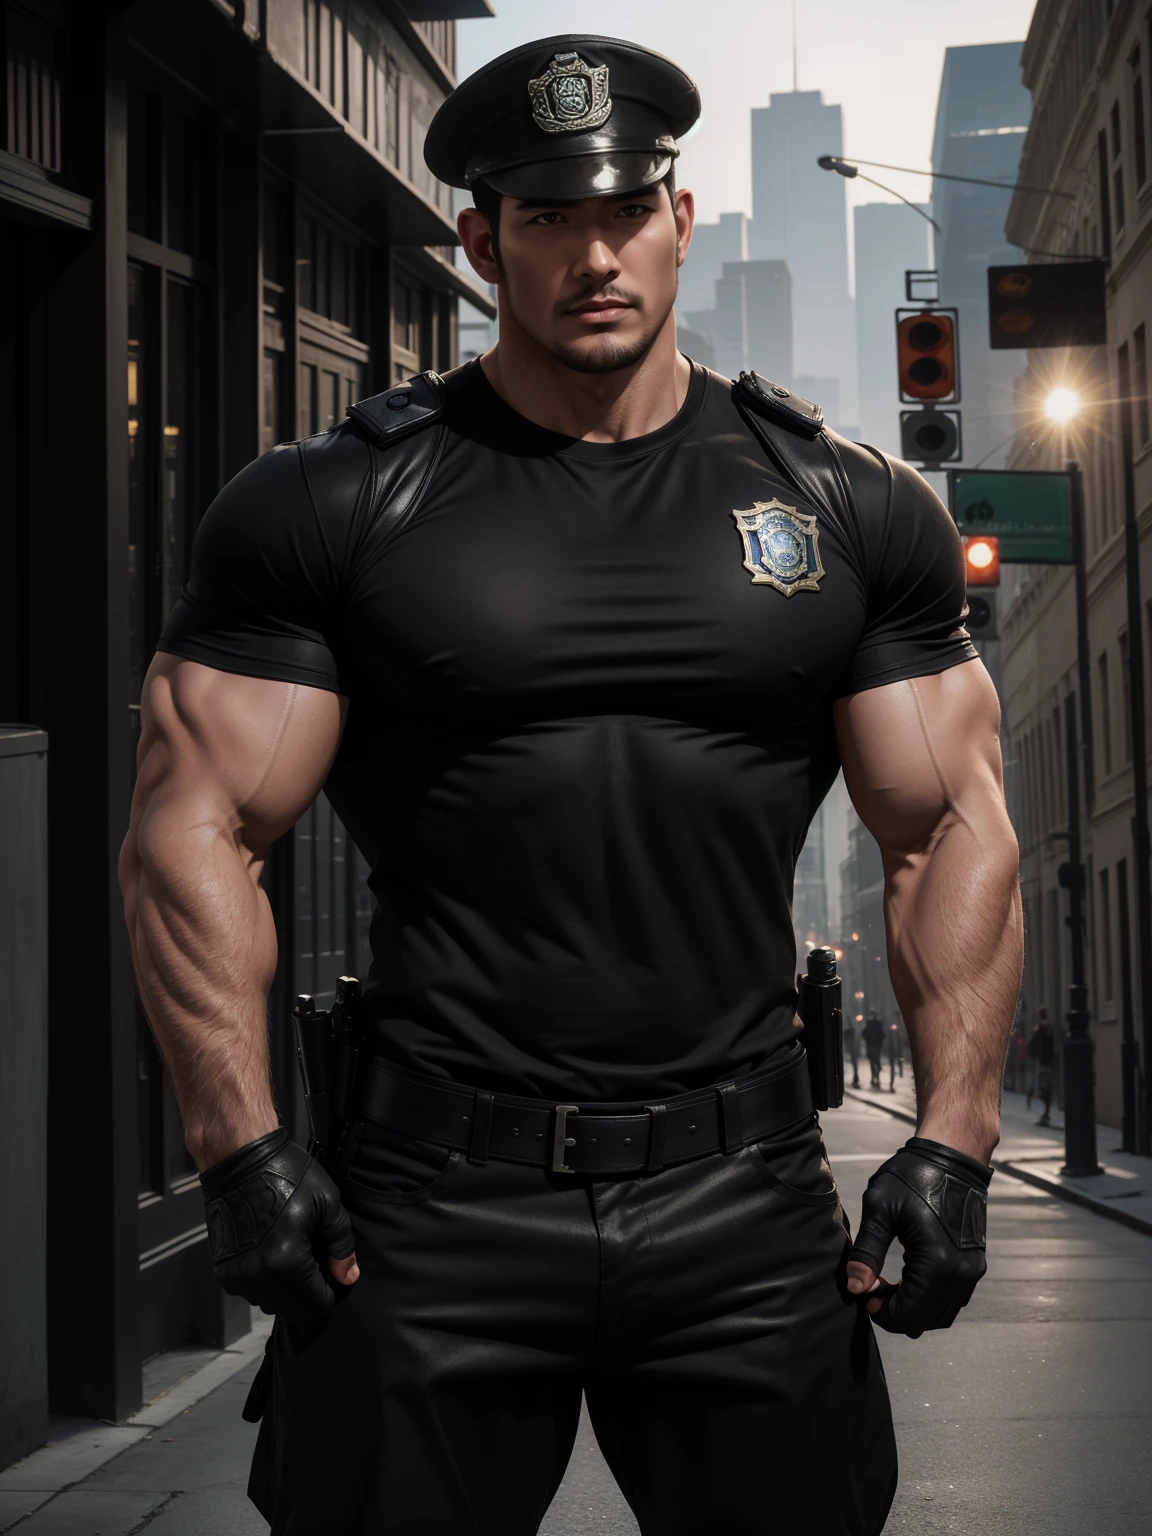 One Tall giant 肌肉發達的 police officer, 中國警察帽, 大黑面具,  在室外的街道上, 棕色緊身T卹, 表情霸氣十足, 抬起下巴, 蓬亂的頭髮, 大腿粗, 棕色緊身T卹, 很緊, 规则对称图案, 強調肌肉, 警服裤, 人物概念（Resident Evil - 克里斯·雷德菲爾德, 克里斯·雷德菲爾德）驕傲的表情, 深邃迷人的眼睛, 英勇的男性姿勢, tall 魁梧, 肌肉發達的！肌肉發達的 thighs, 硬漢, 完美的臉部特徵, 高的, 魁梧, Heqiang, 超增益又酷, 高解析度委員會, 魅力十足的強者, 陽光燦爛, 令人眼花撩亂